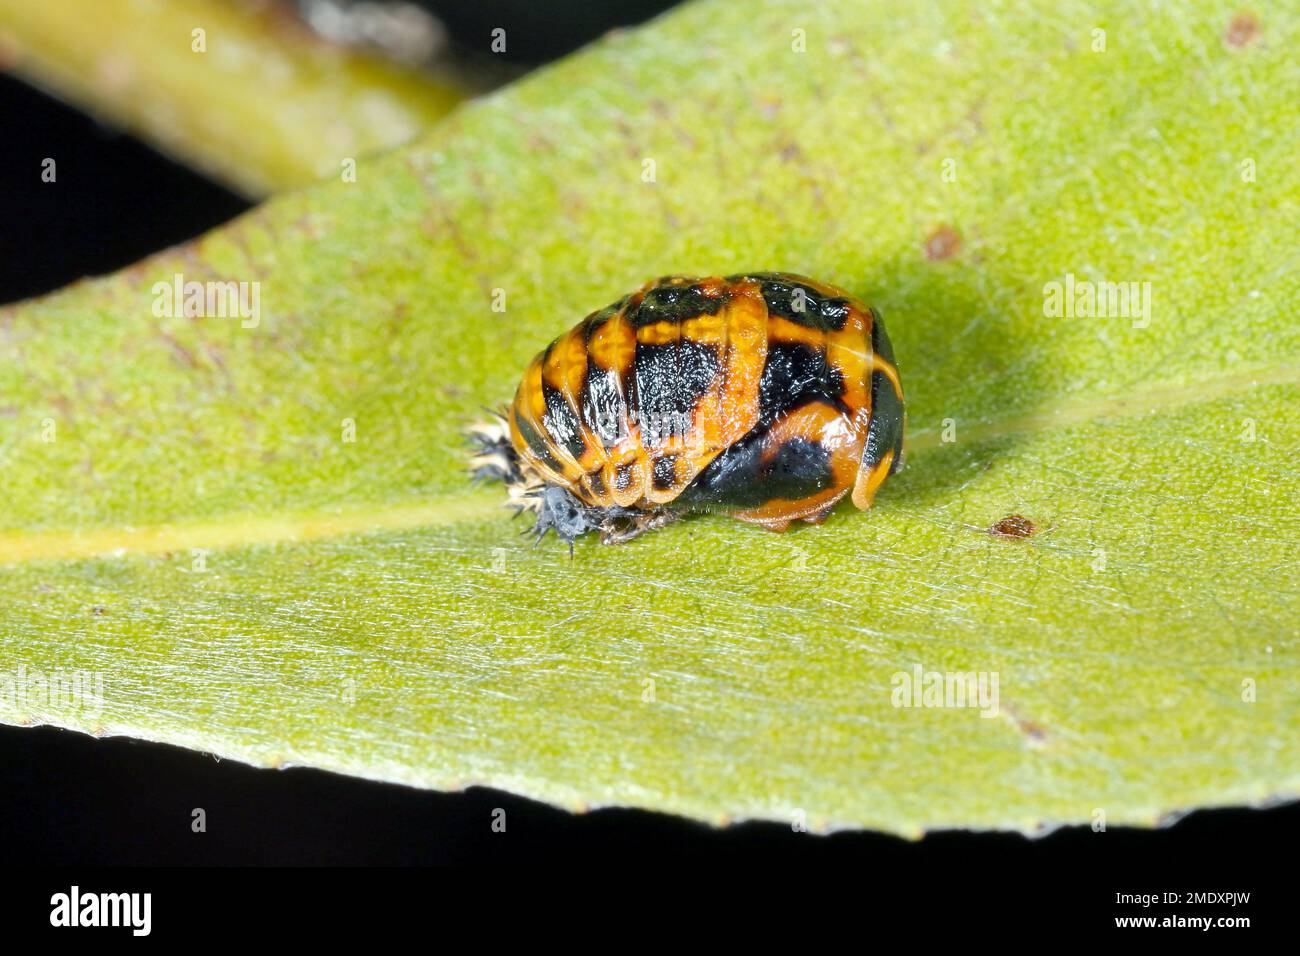 Pupa di Harmonia axyridis Ladybug arlecchino su foglia. Foto Stock